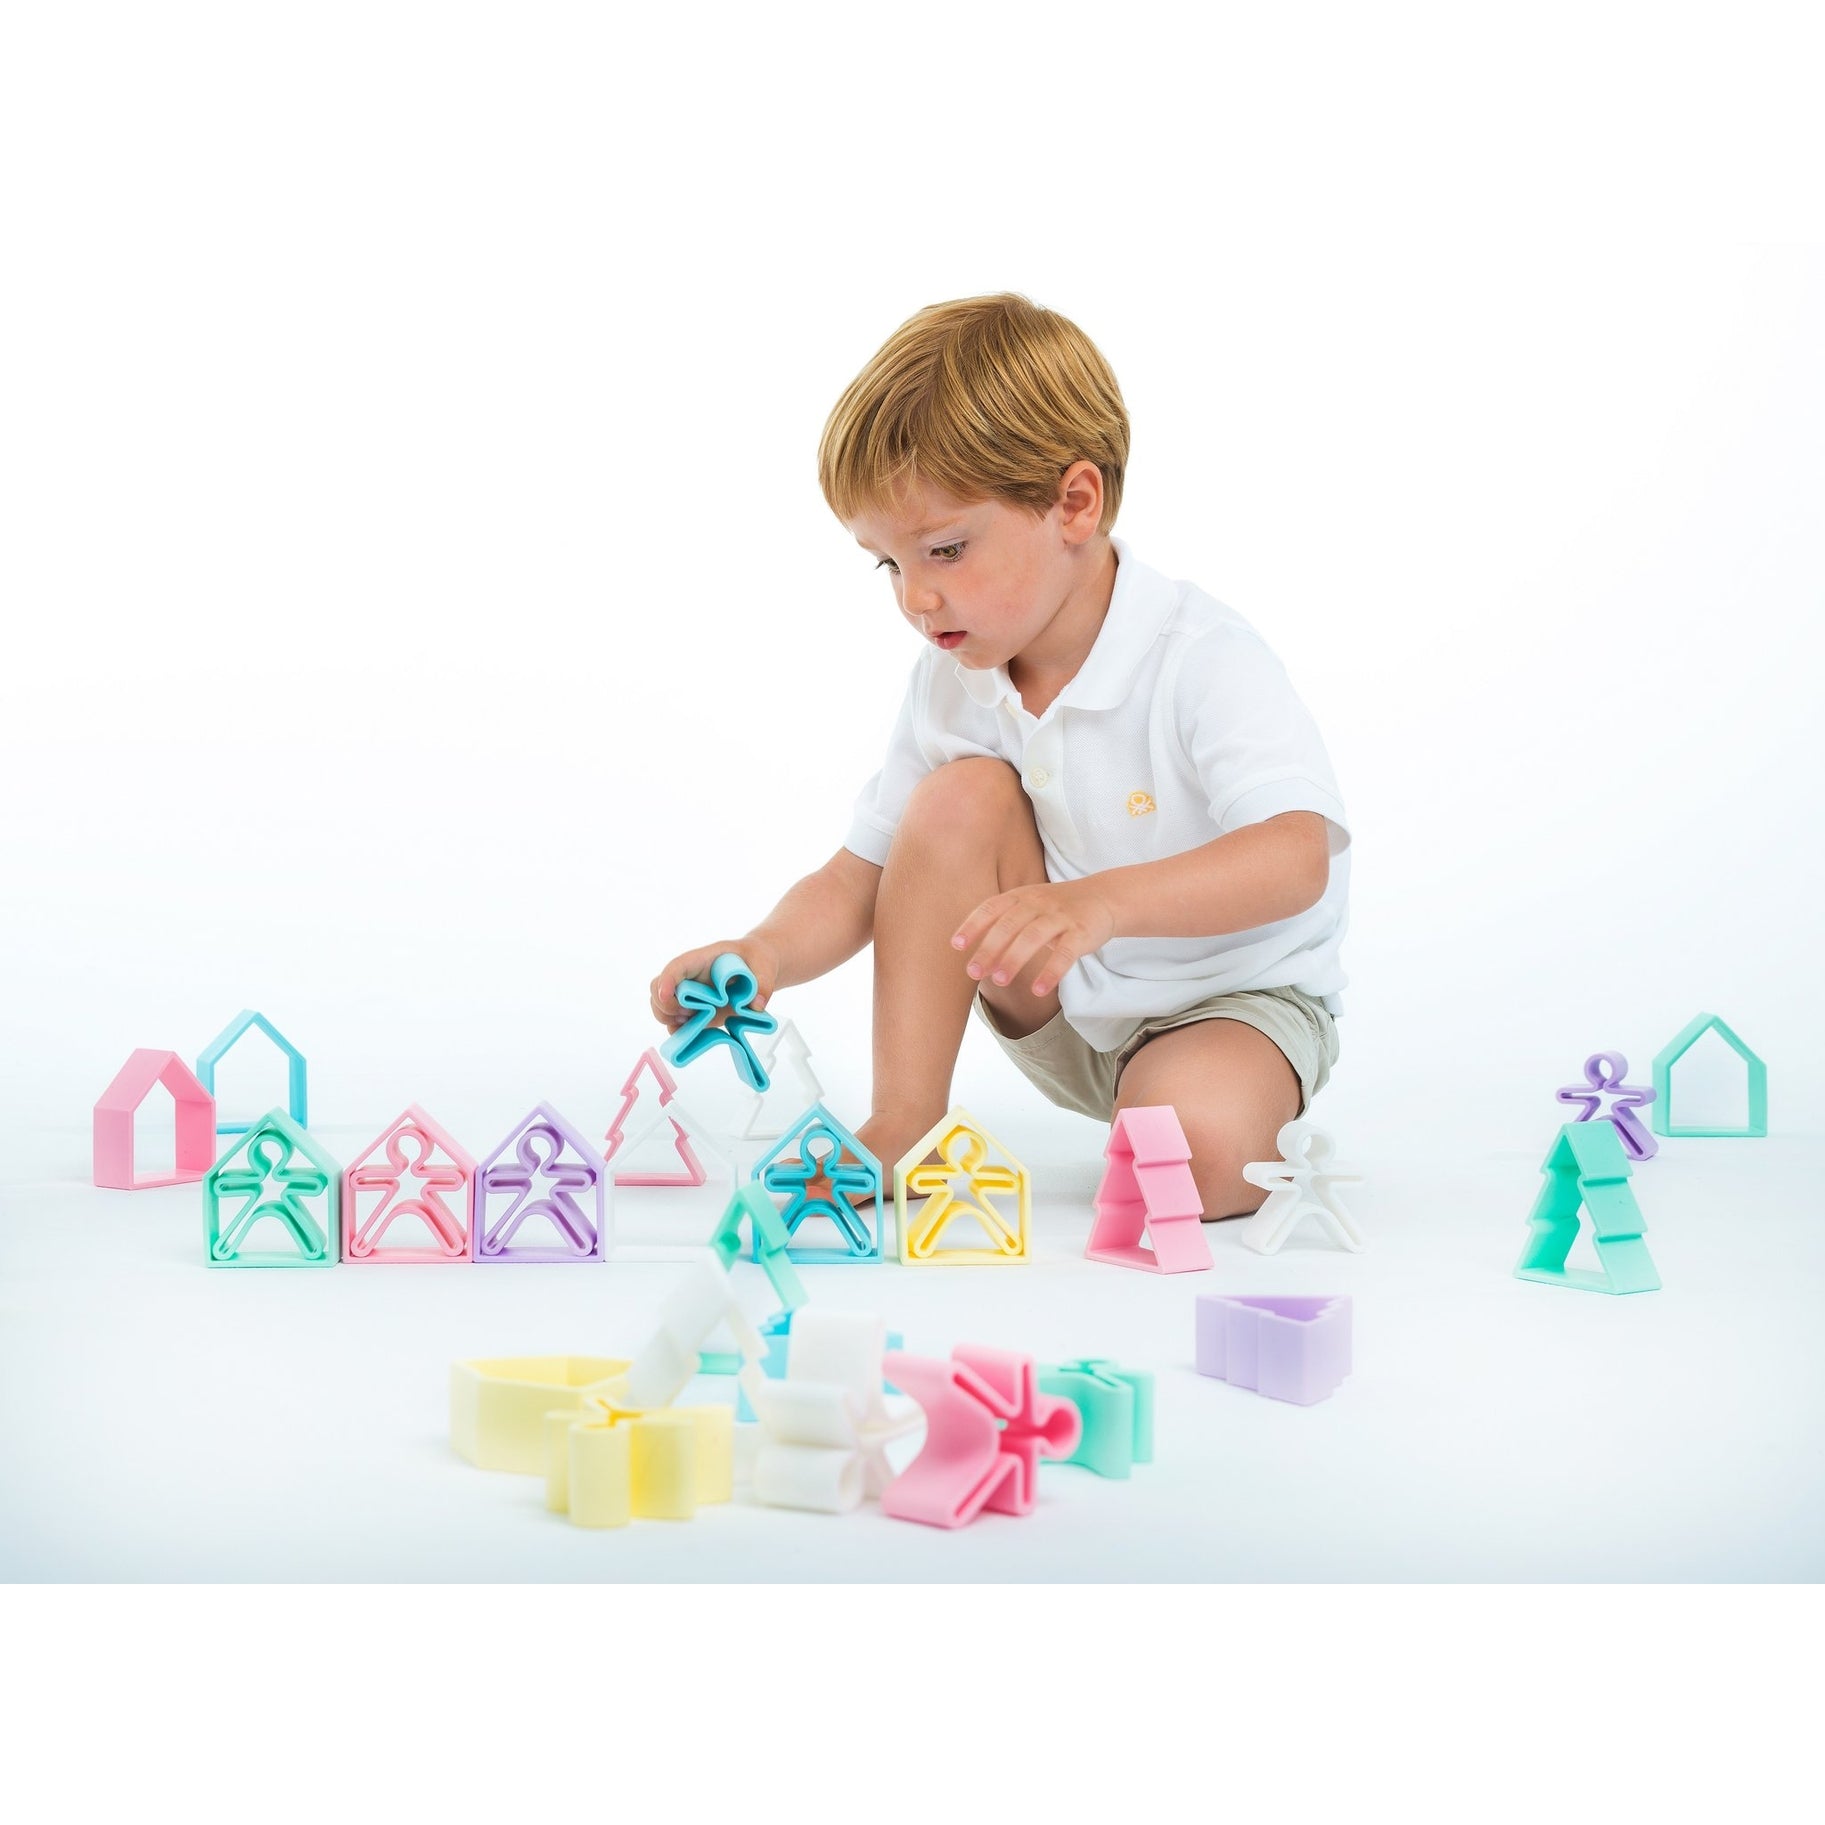 House + Kid Waldorf Toy